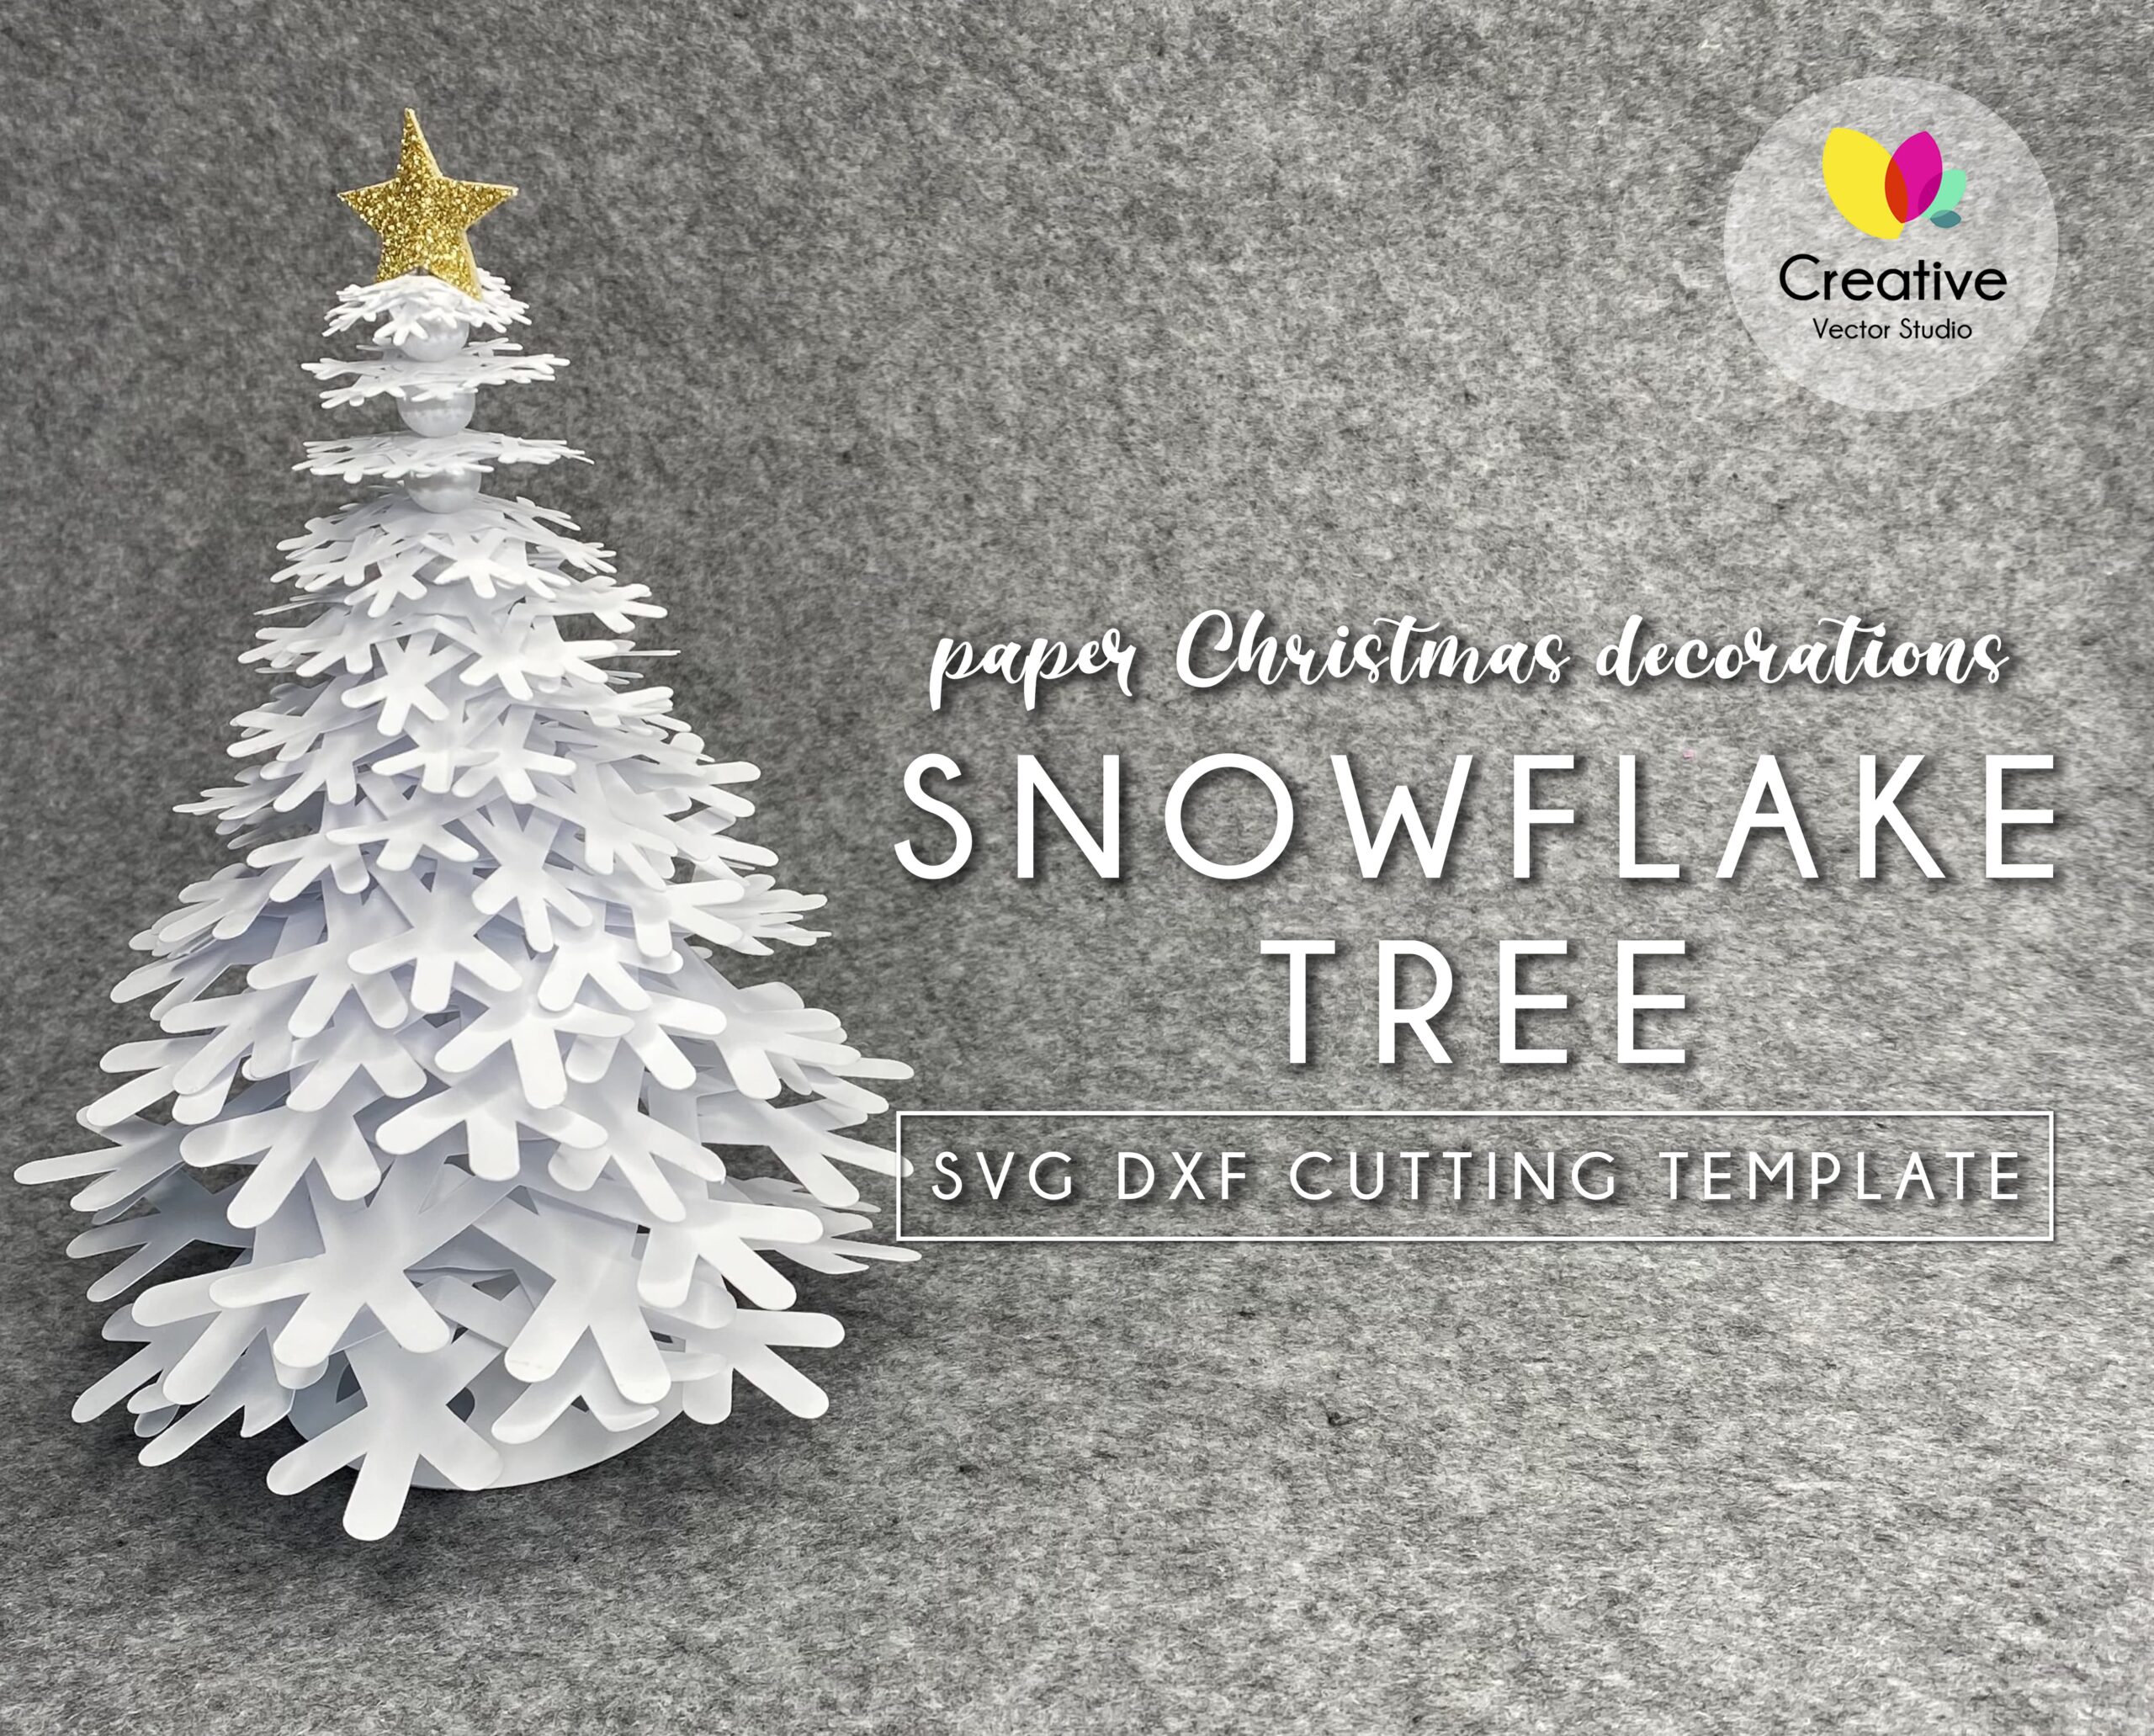 3D Paper Christmas Tree SVG - Creative Vector Studio